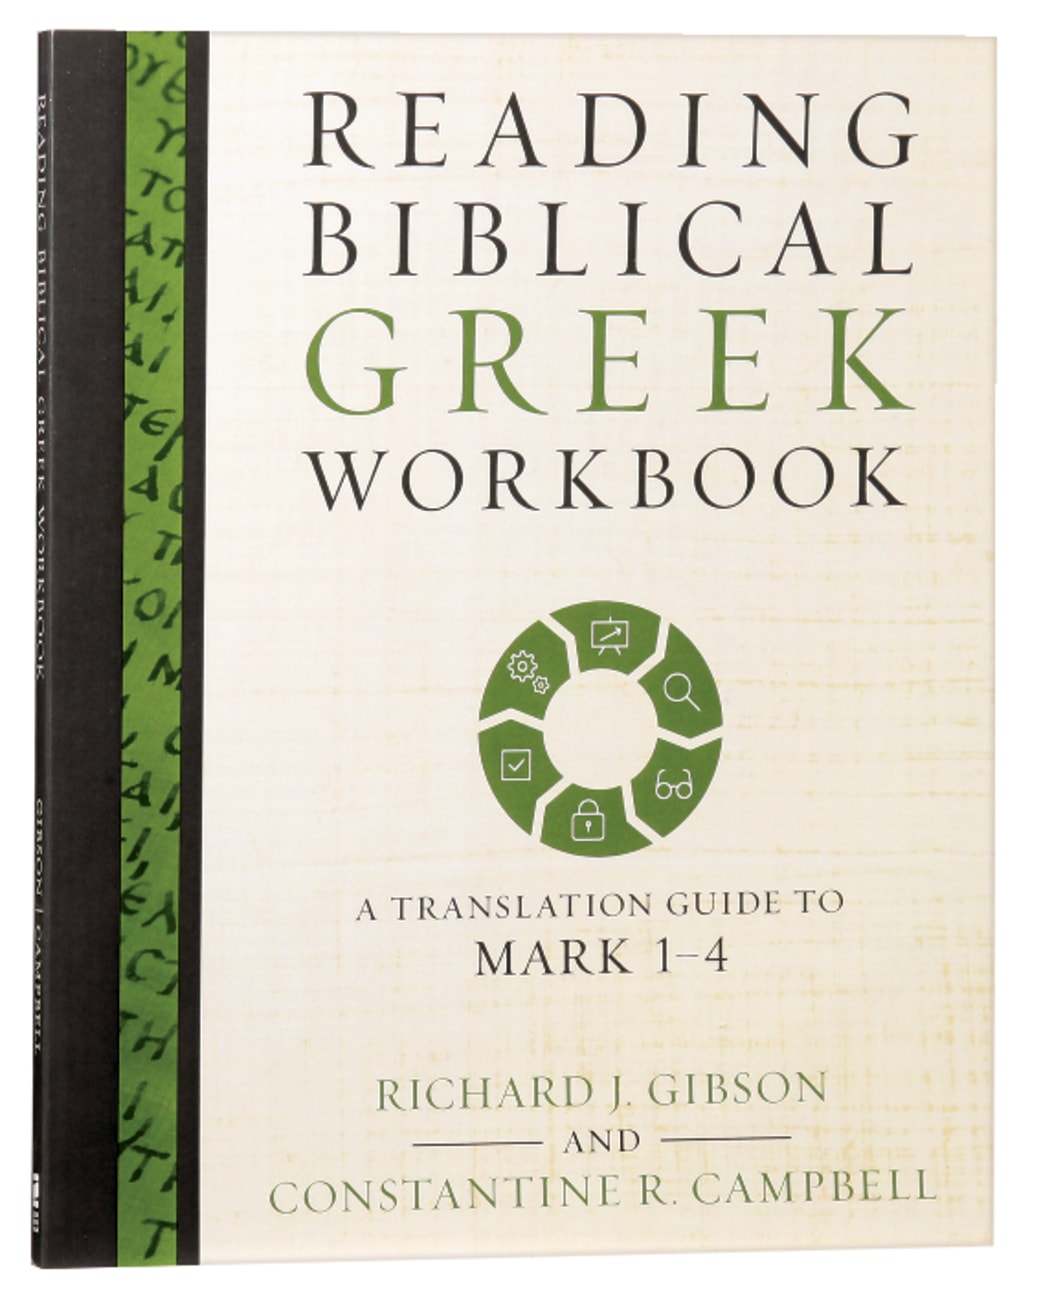 Reading Biblical Greek: Workbook - a Translation Guide to Mark 1-4 Paperback